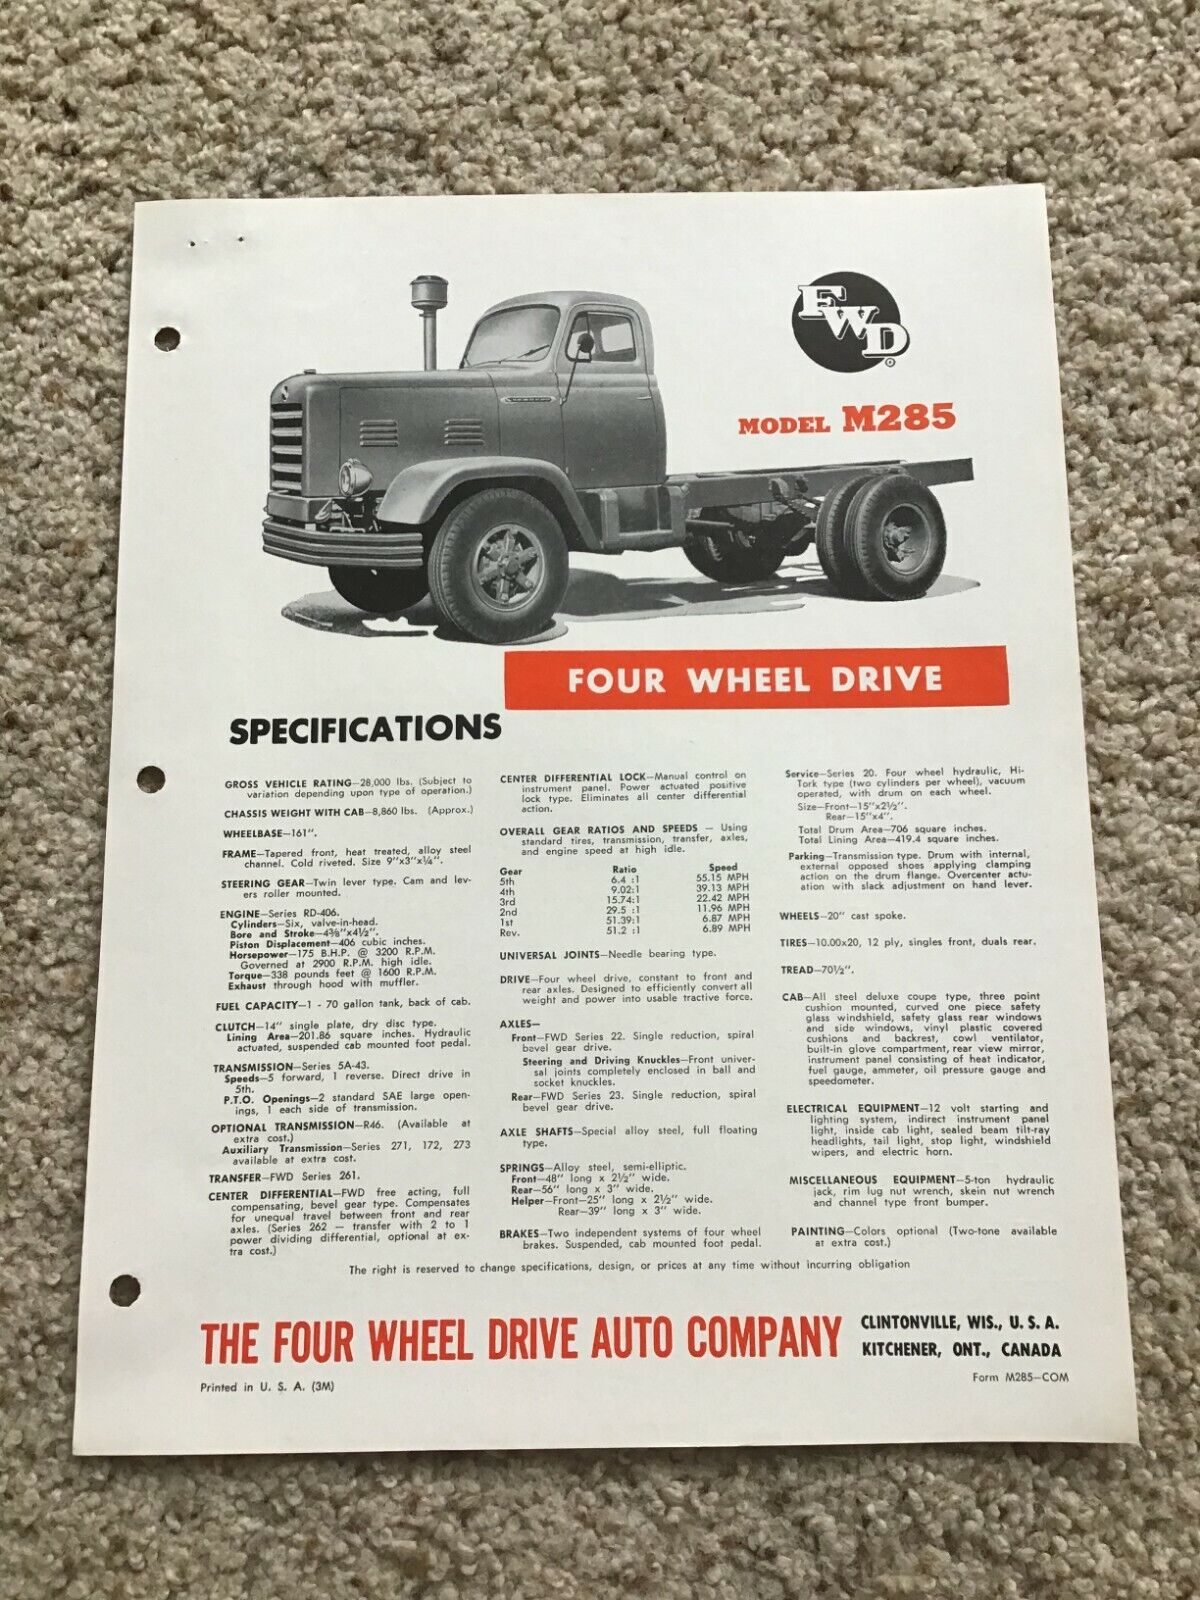 1950s  Fwd Model M285 4-wheel Drive Truck Sales Information.